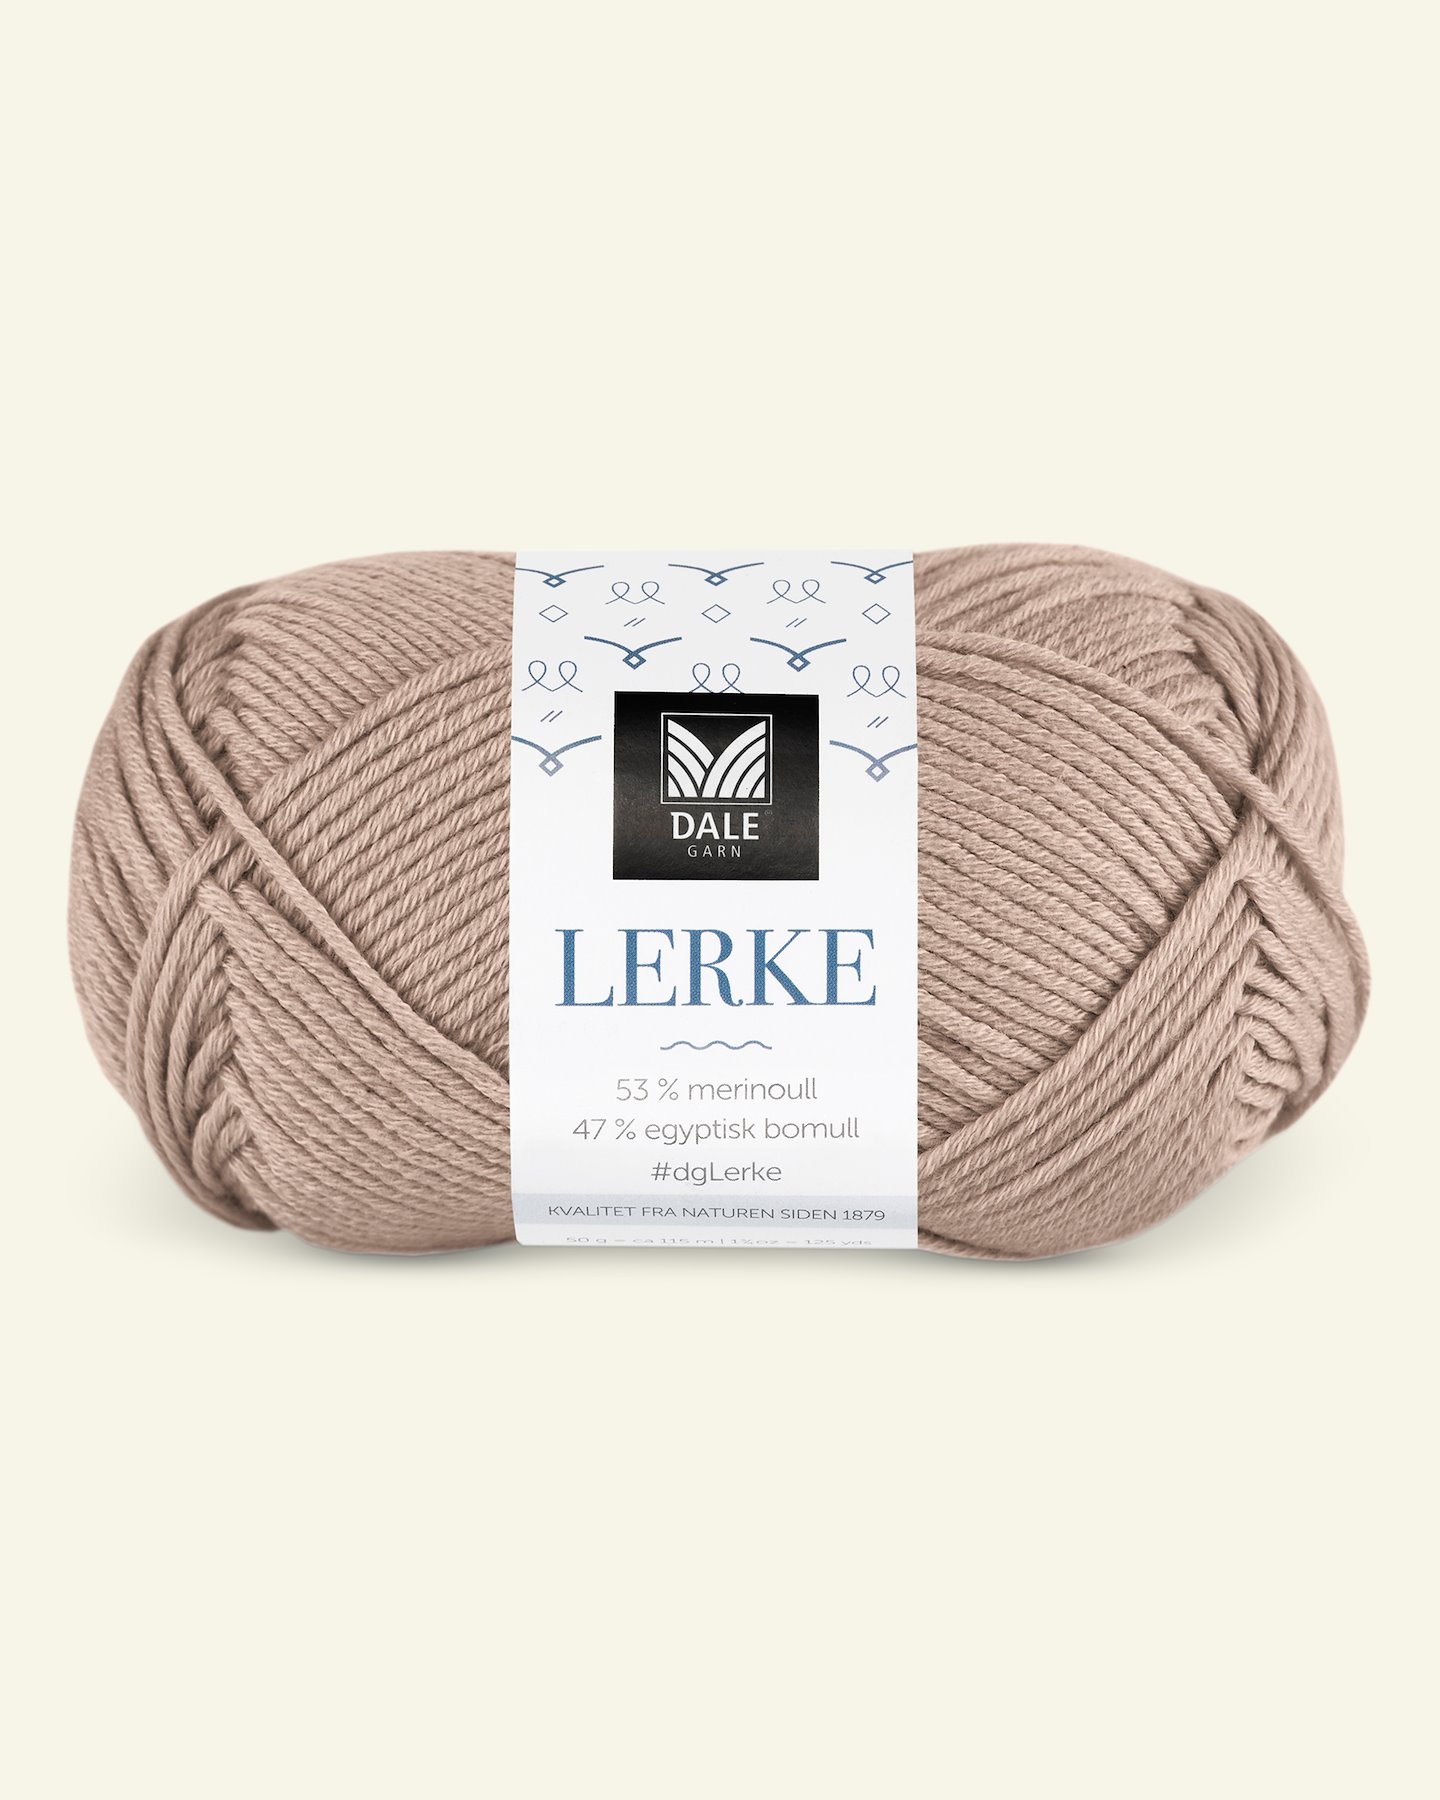 Dale Garn, merino cotton yarn "Lerke", caramel (2641) 90000837_pack